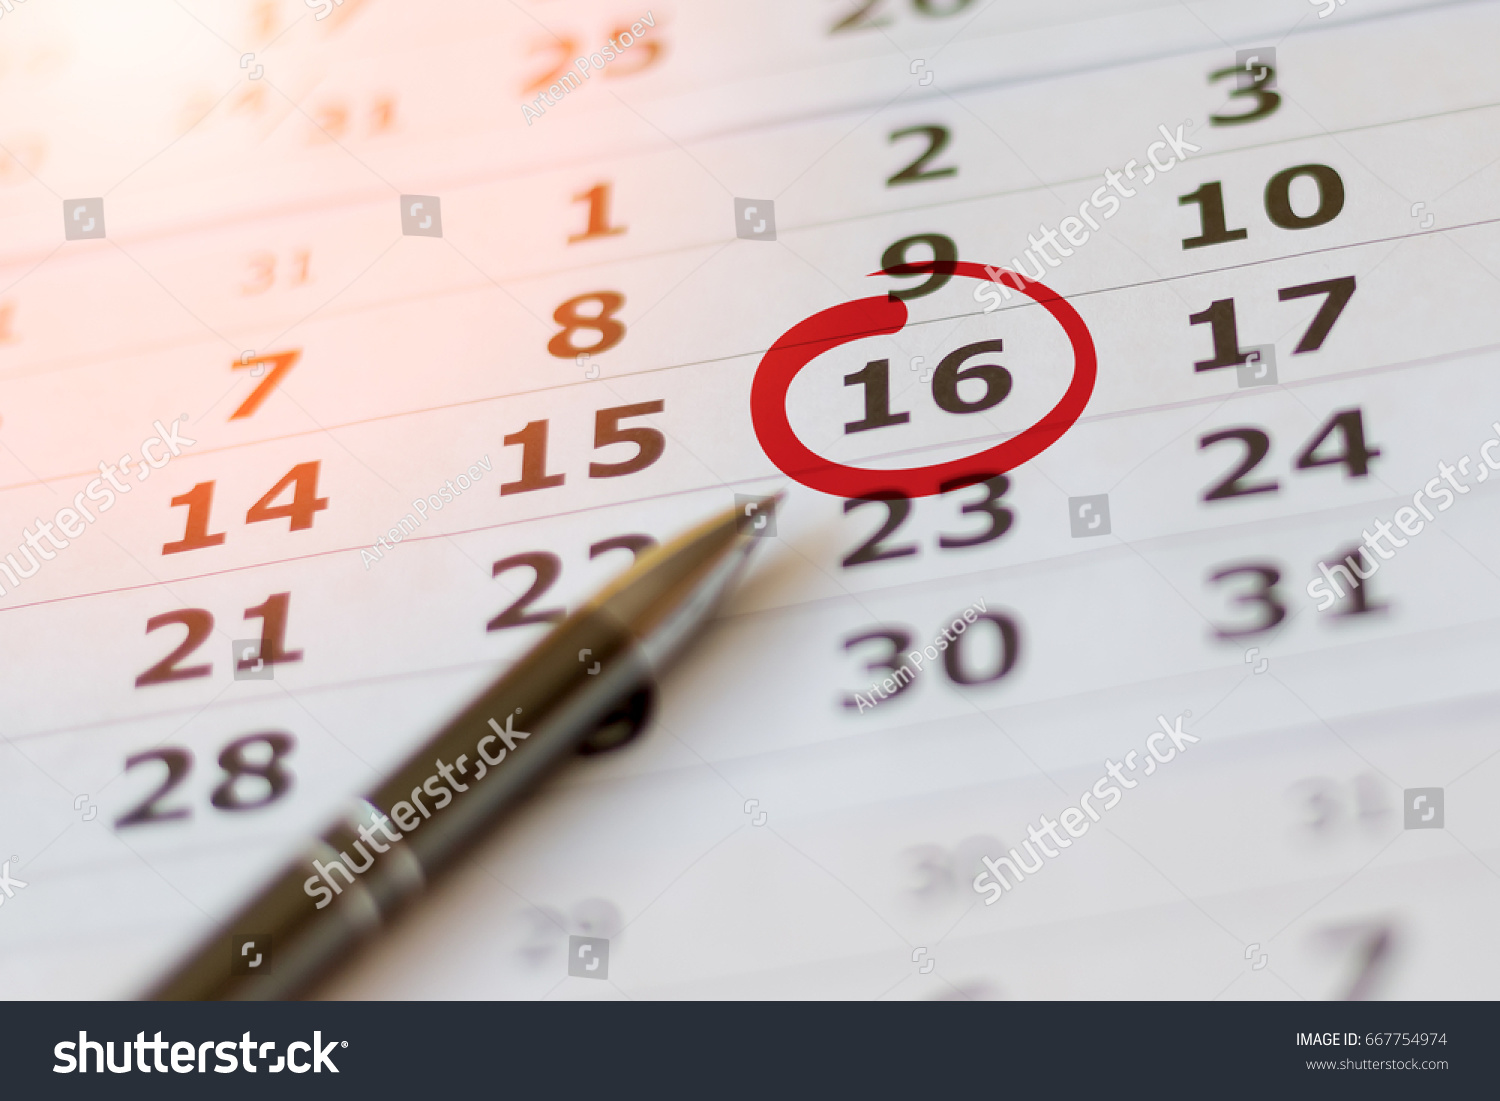 170 861 Circle calendar Images Stock Photos Vectors Shutterstock